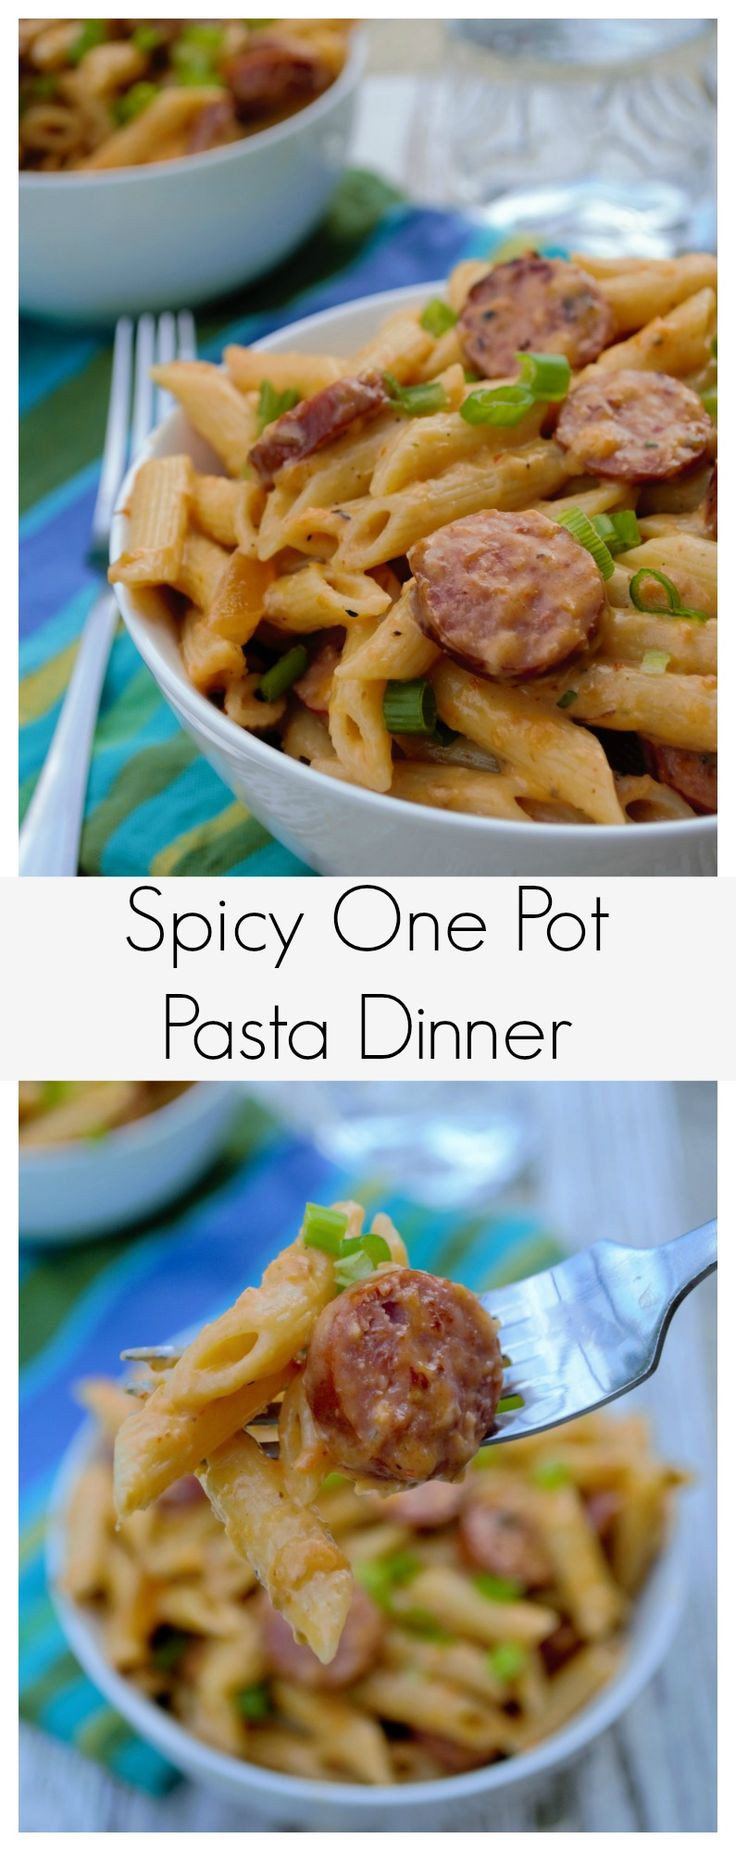 One Pot Pasta Dinners
 Spicy e Pot Pasta Dinner Recipe